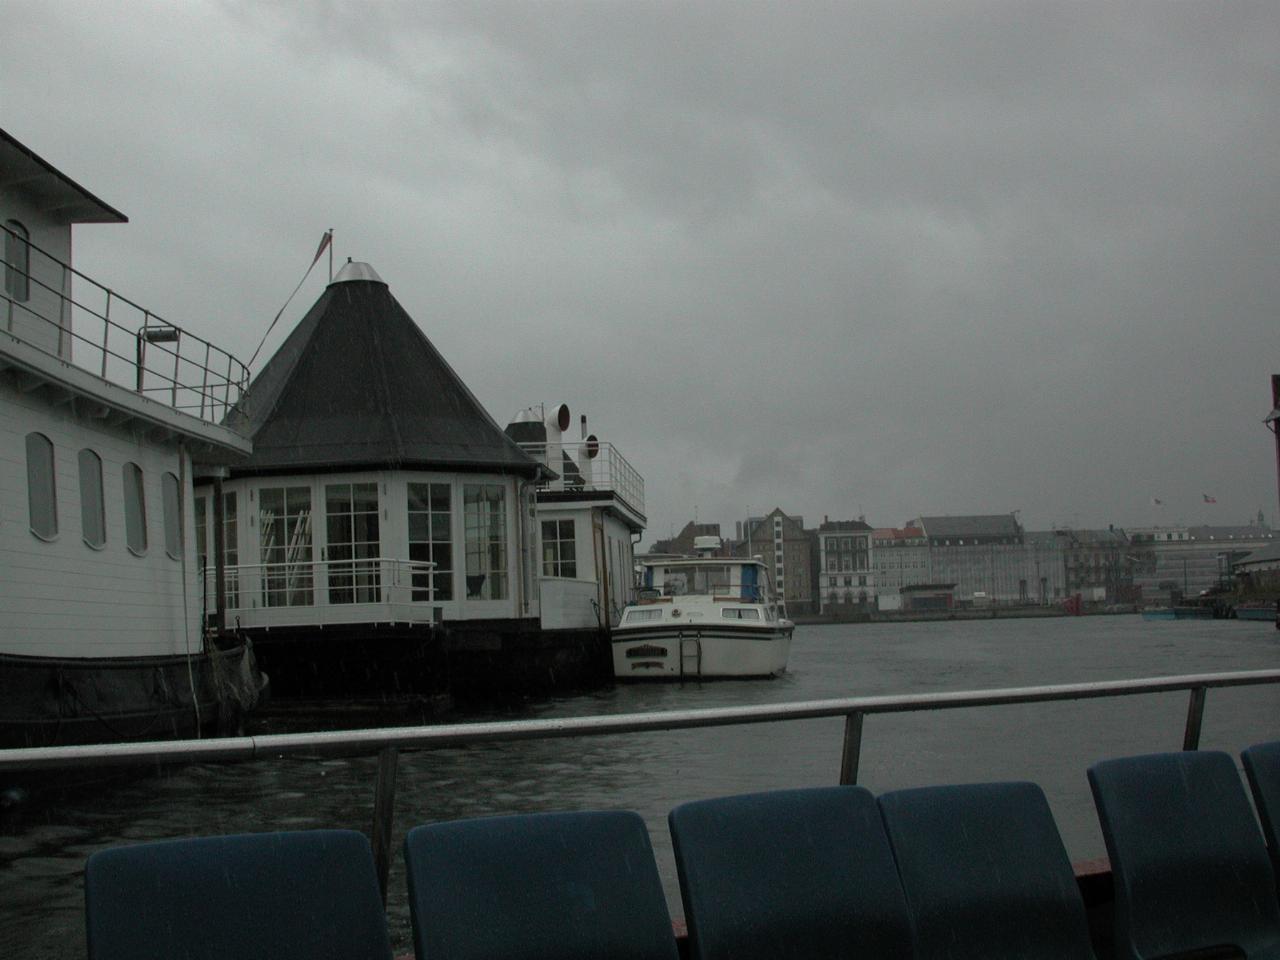 KPLU Viking Jazz: House boat on Trangraven canal